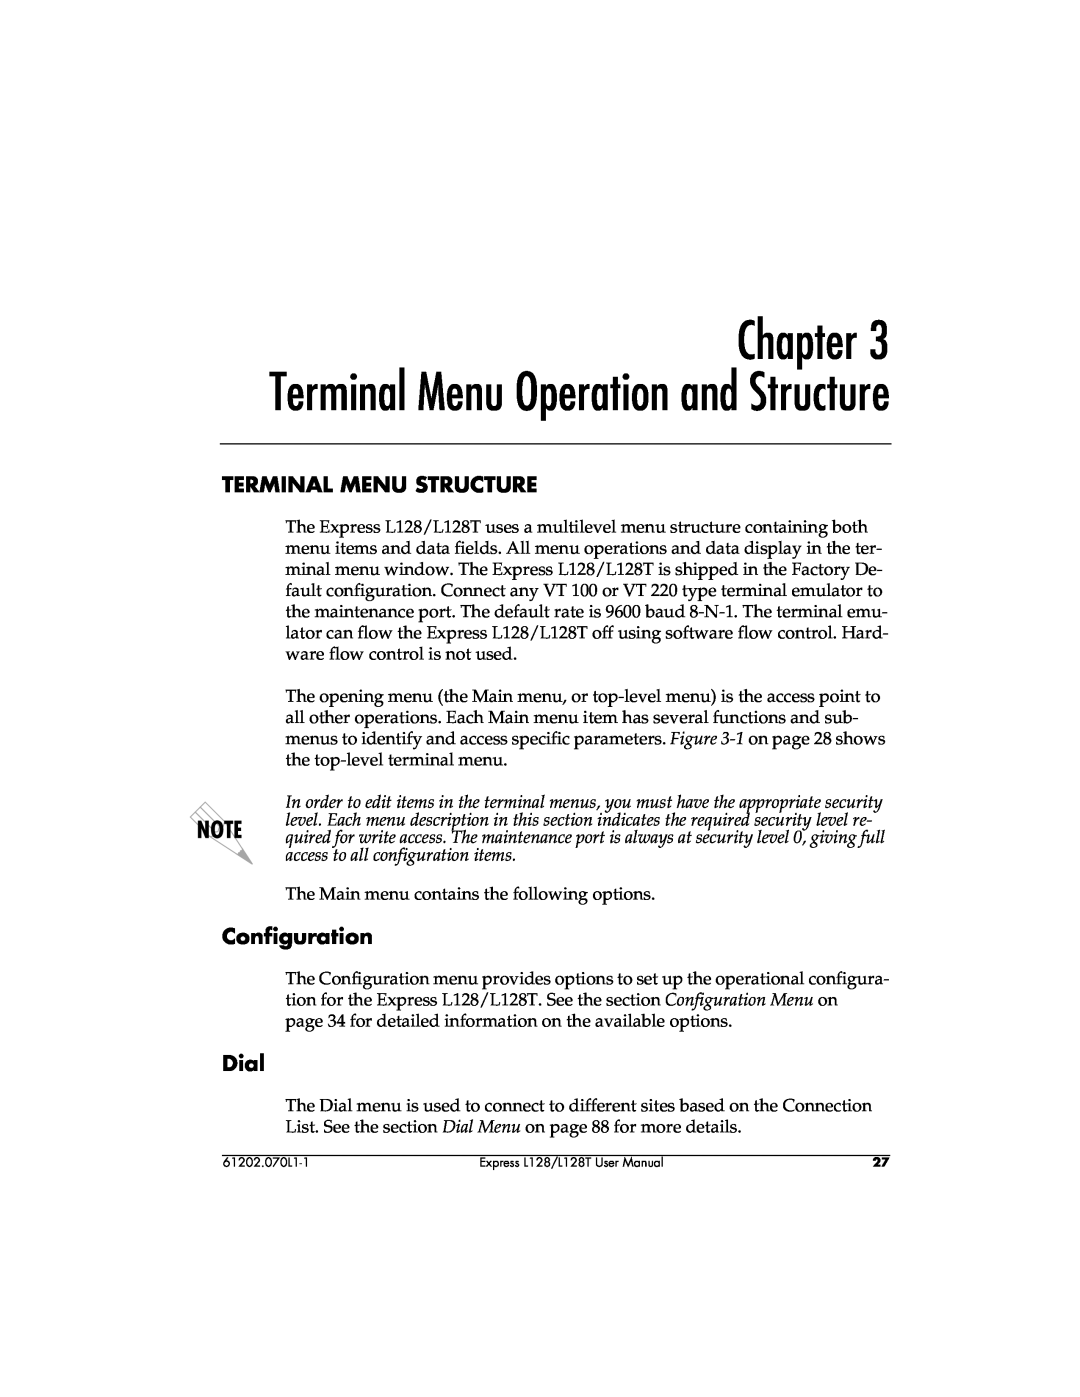 ADTRAN L128T user manual Terminal Menu Operation and Structure, Terminal Menu Structure, Dial, Configuration 